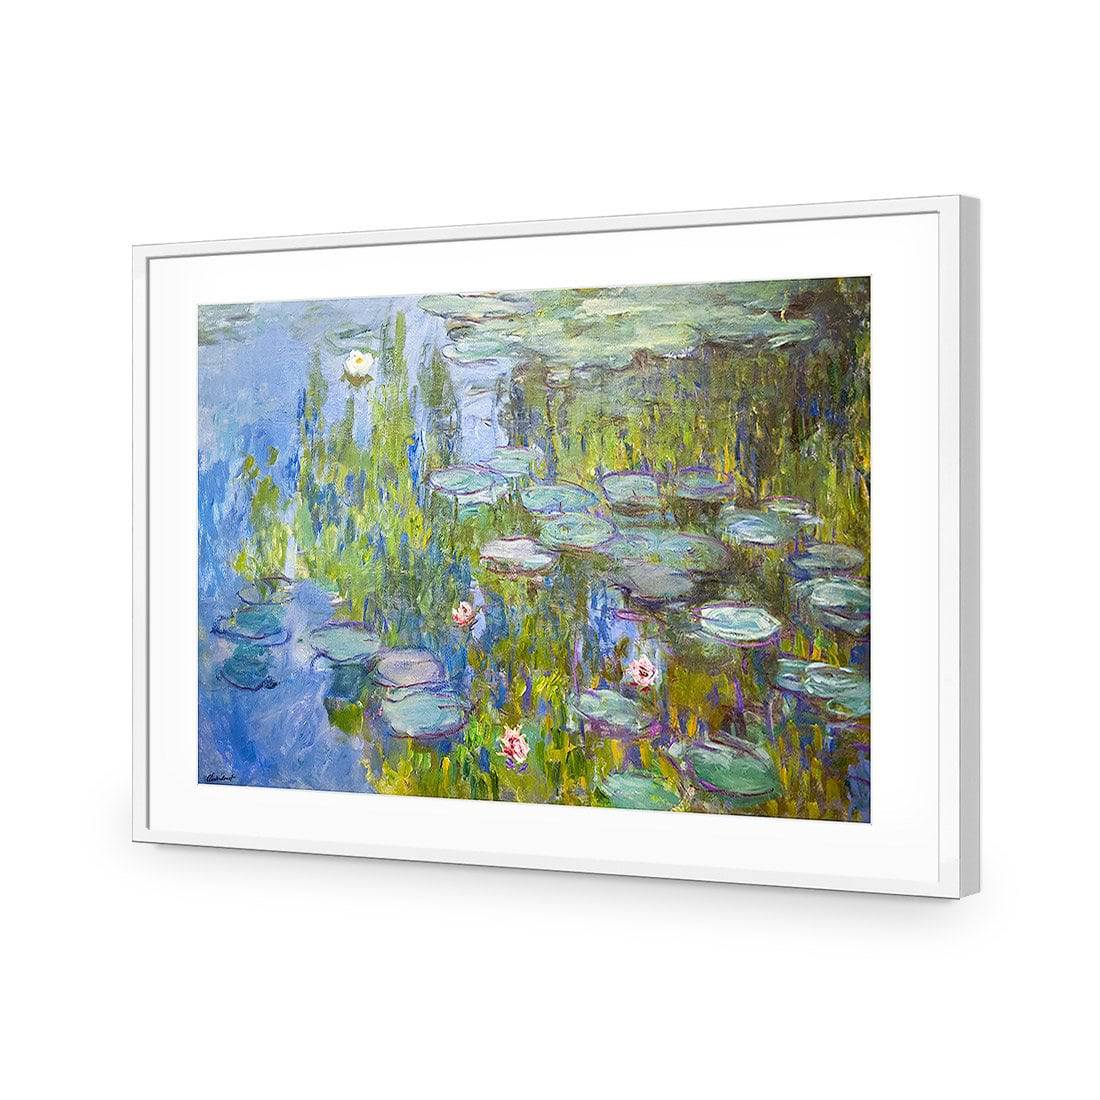 Sea Roses - Monet-Acrylic-Wall Art Design-With Border-Acrylic - White Frame-45x30cm-Wall Art Designs